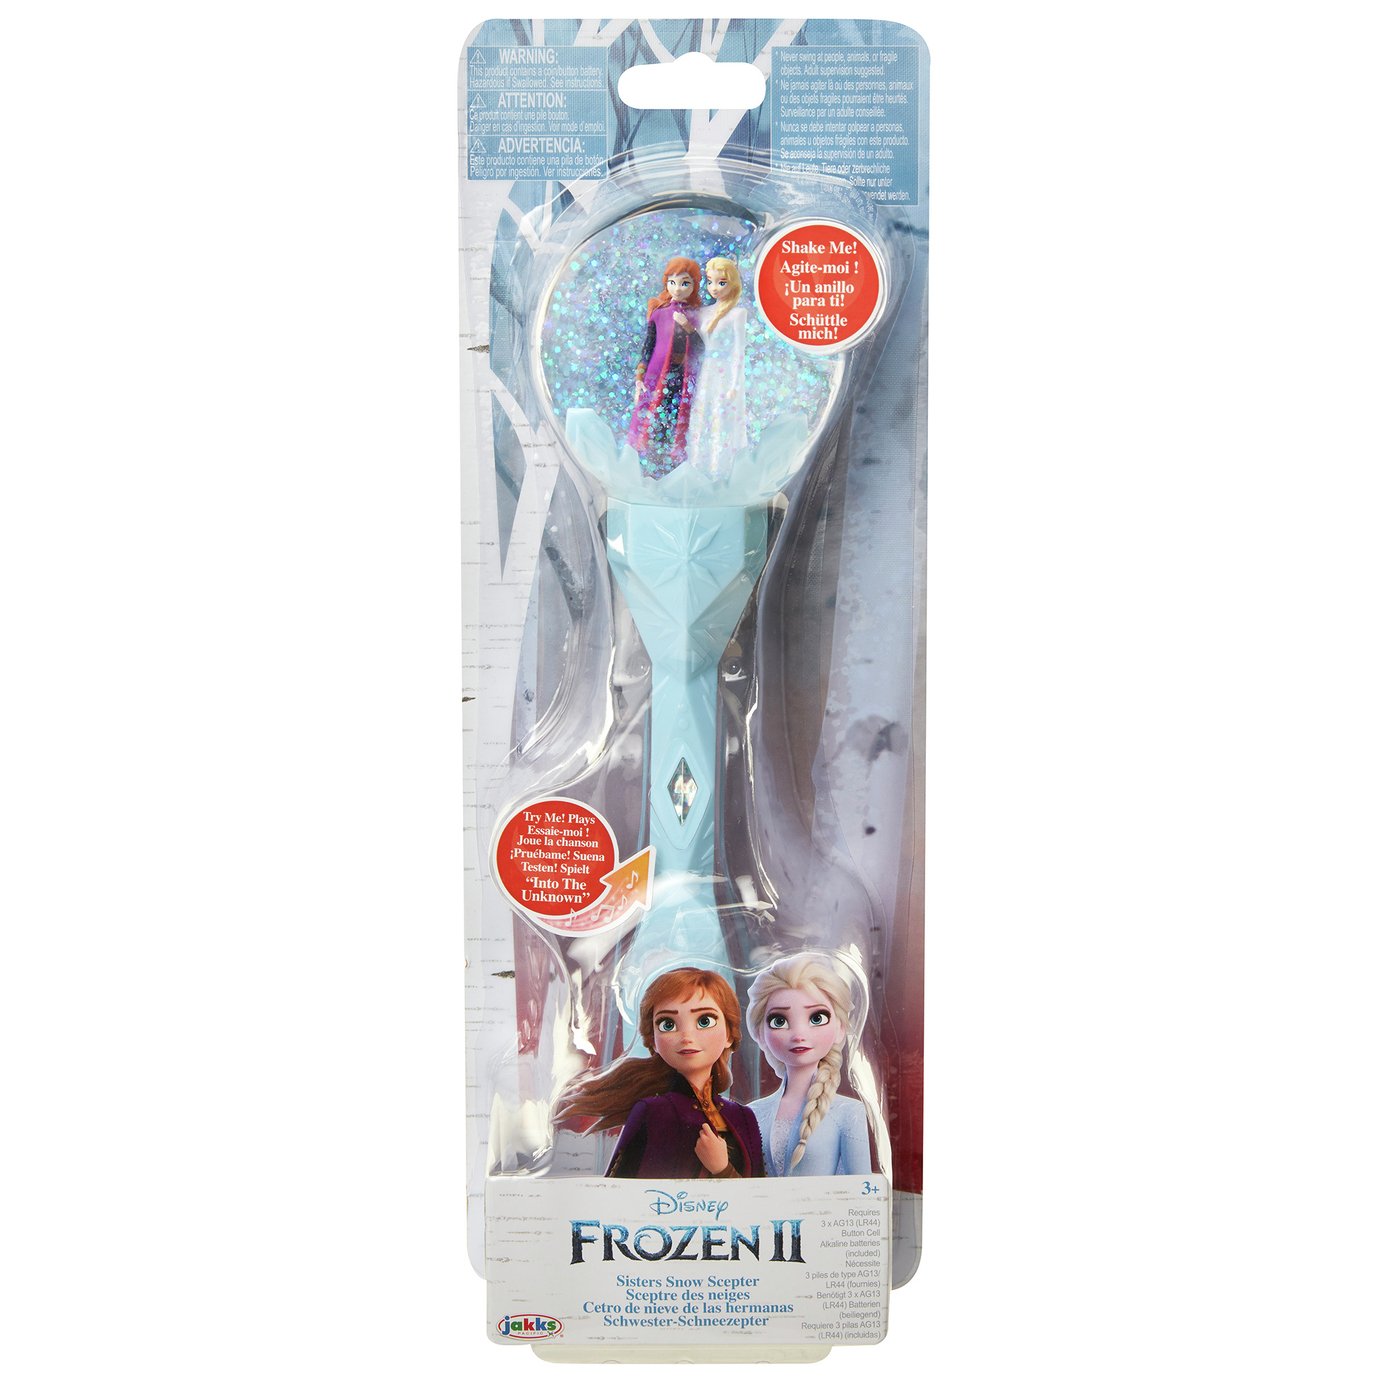 Disney Frozen 2 Musical Snow Wand Review